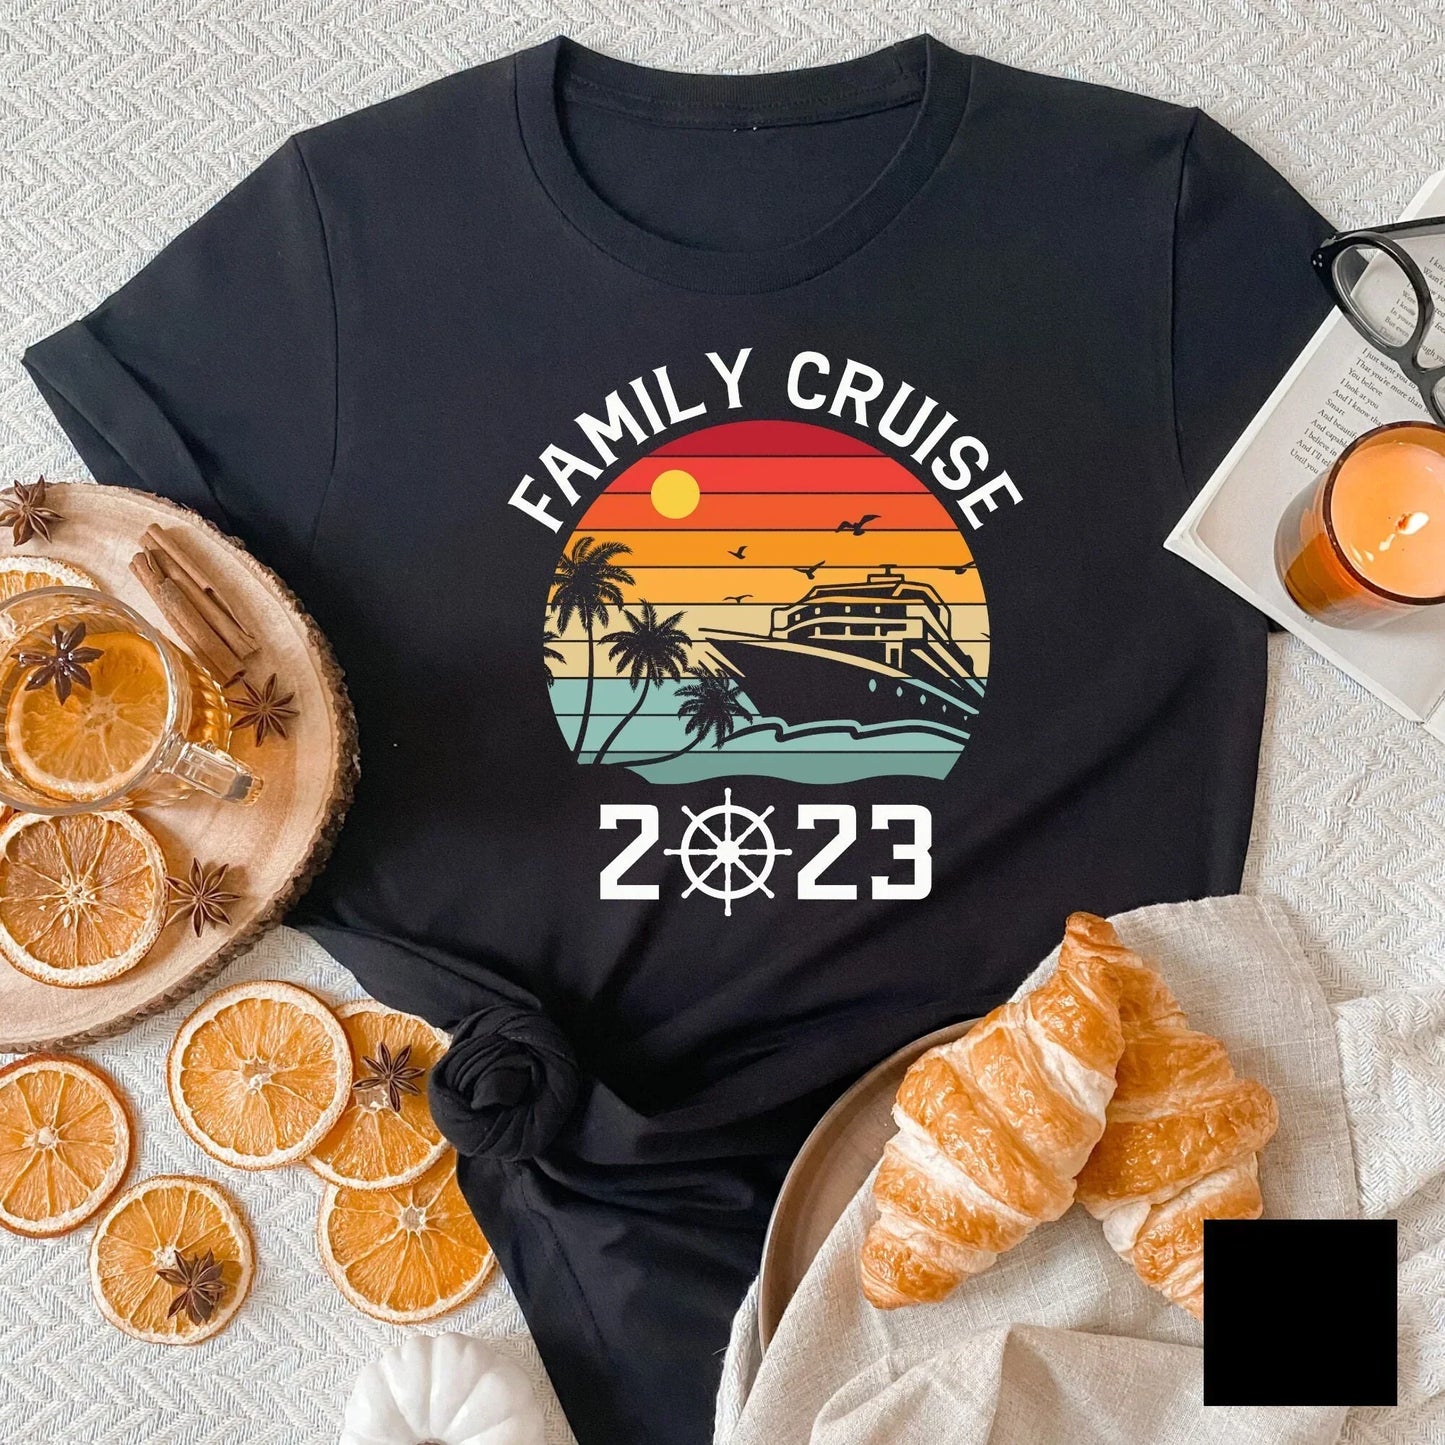 Family Cruise Shirts HMDesignStudioUS